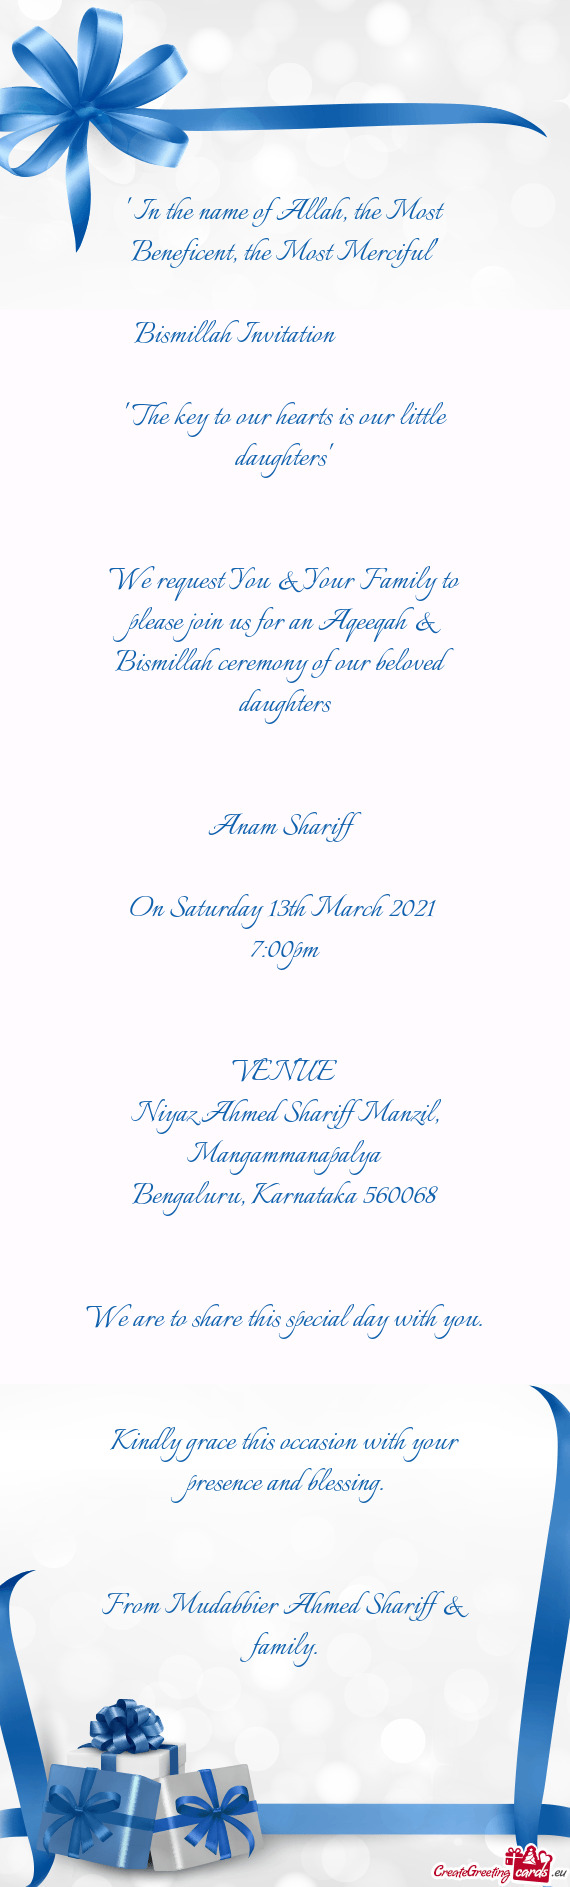 Bismillah Invitation